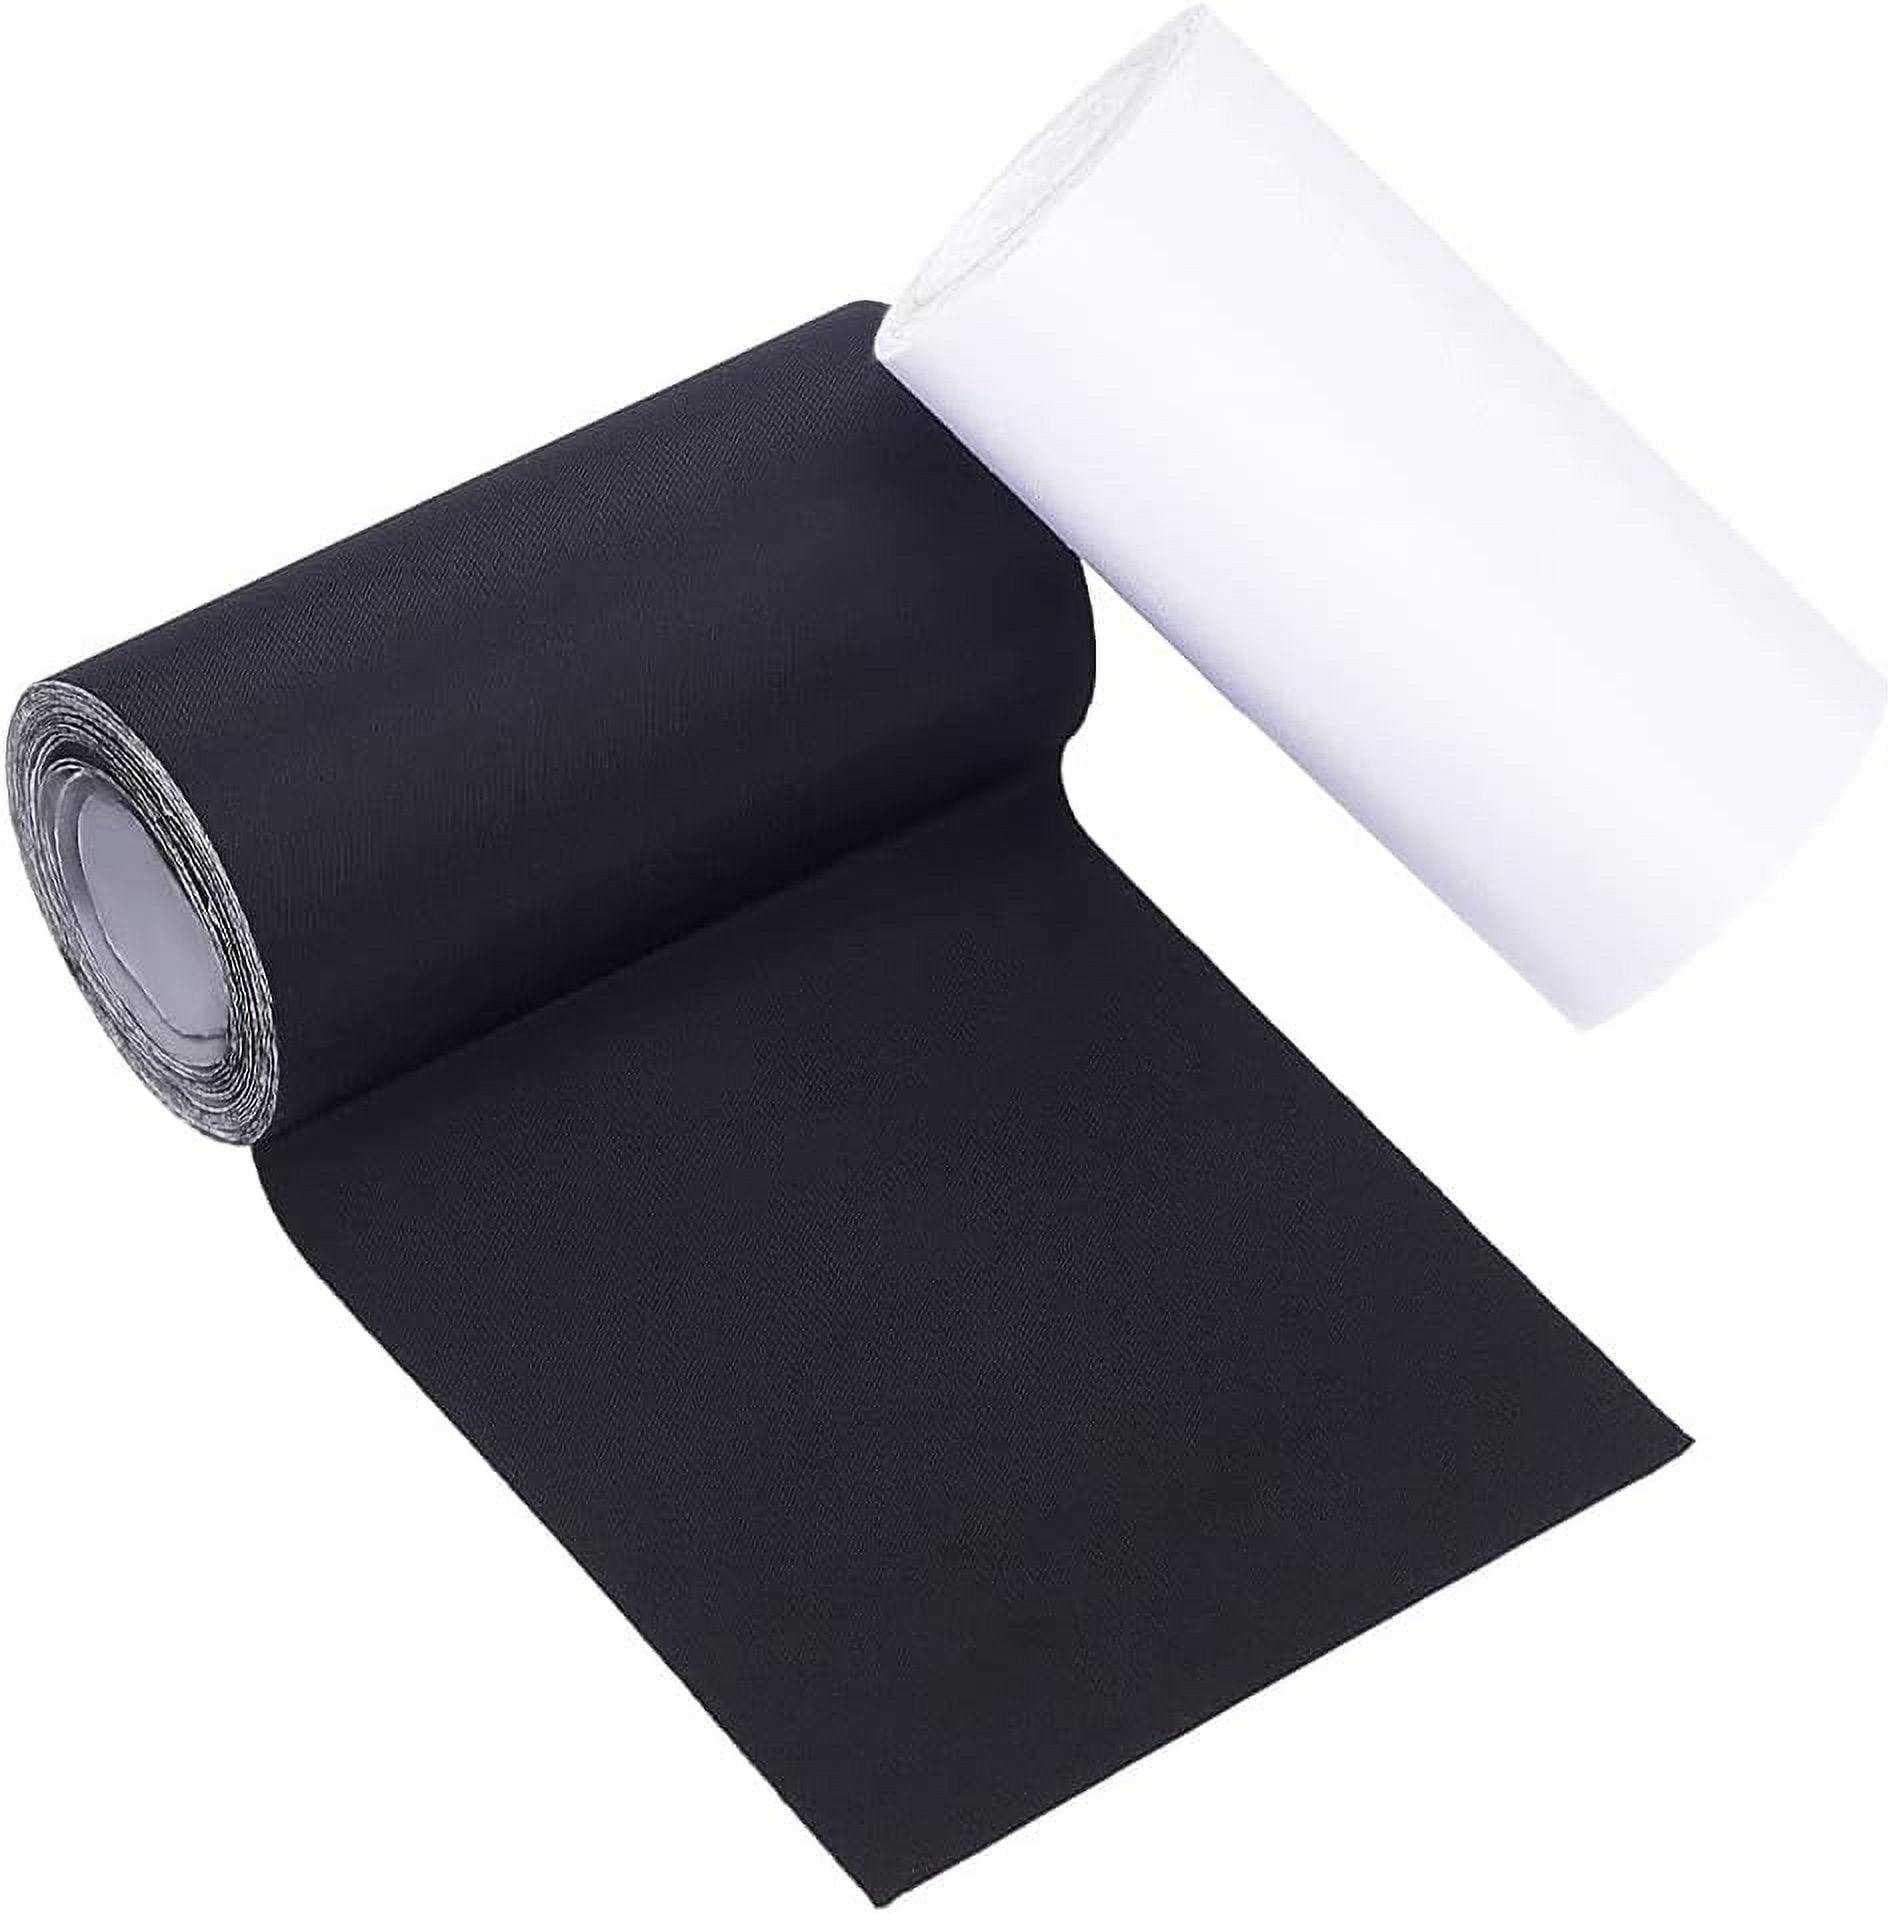 Adhesive Black Felt Sheets Sticky Felt Fabric Pads 15x15cm 1/16 Thickness  DIY